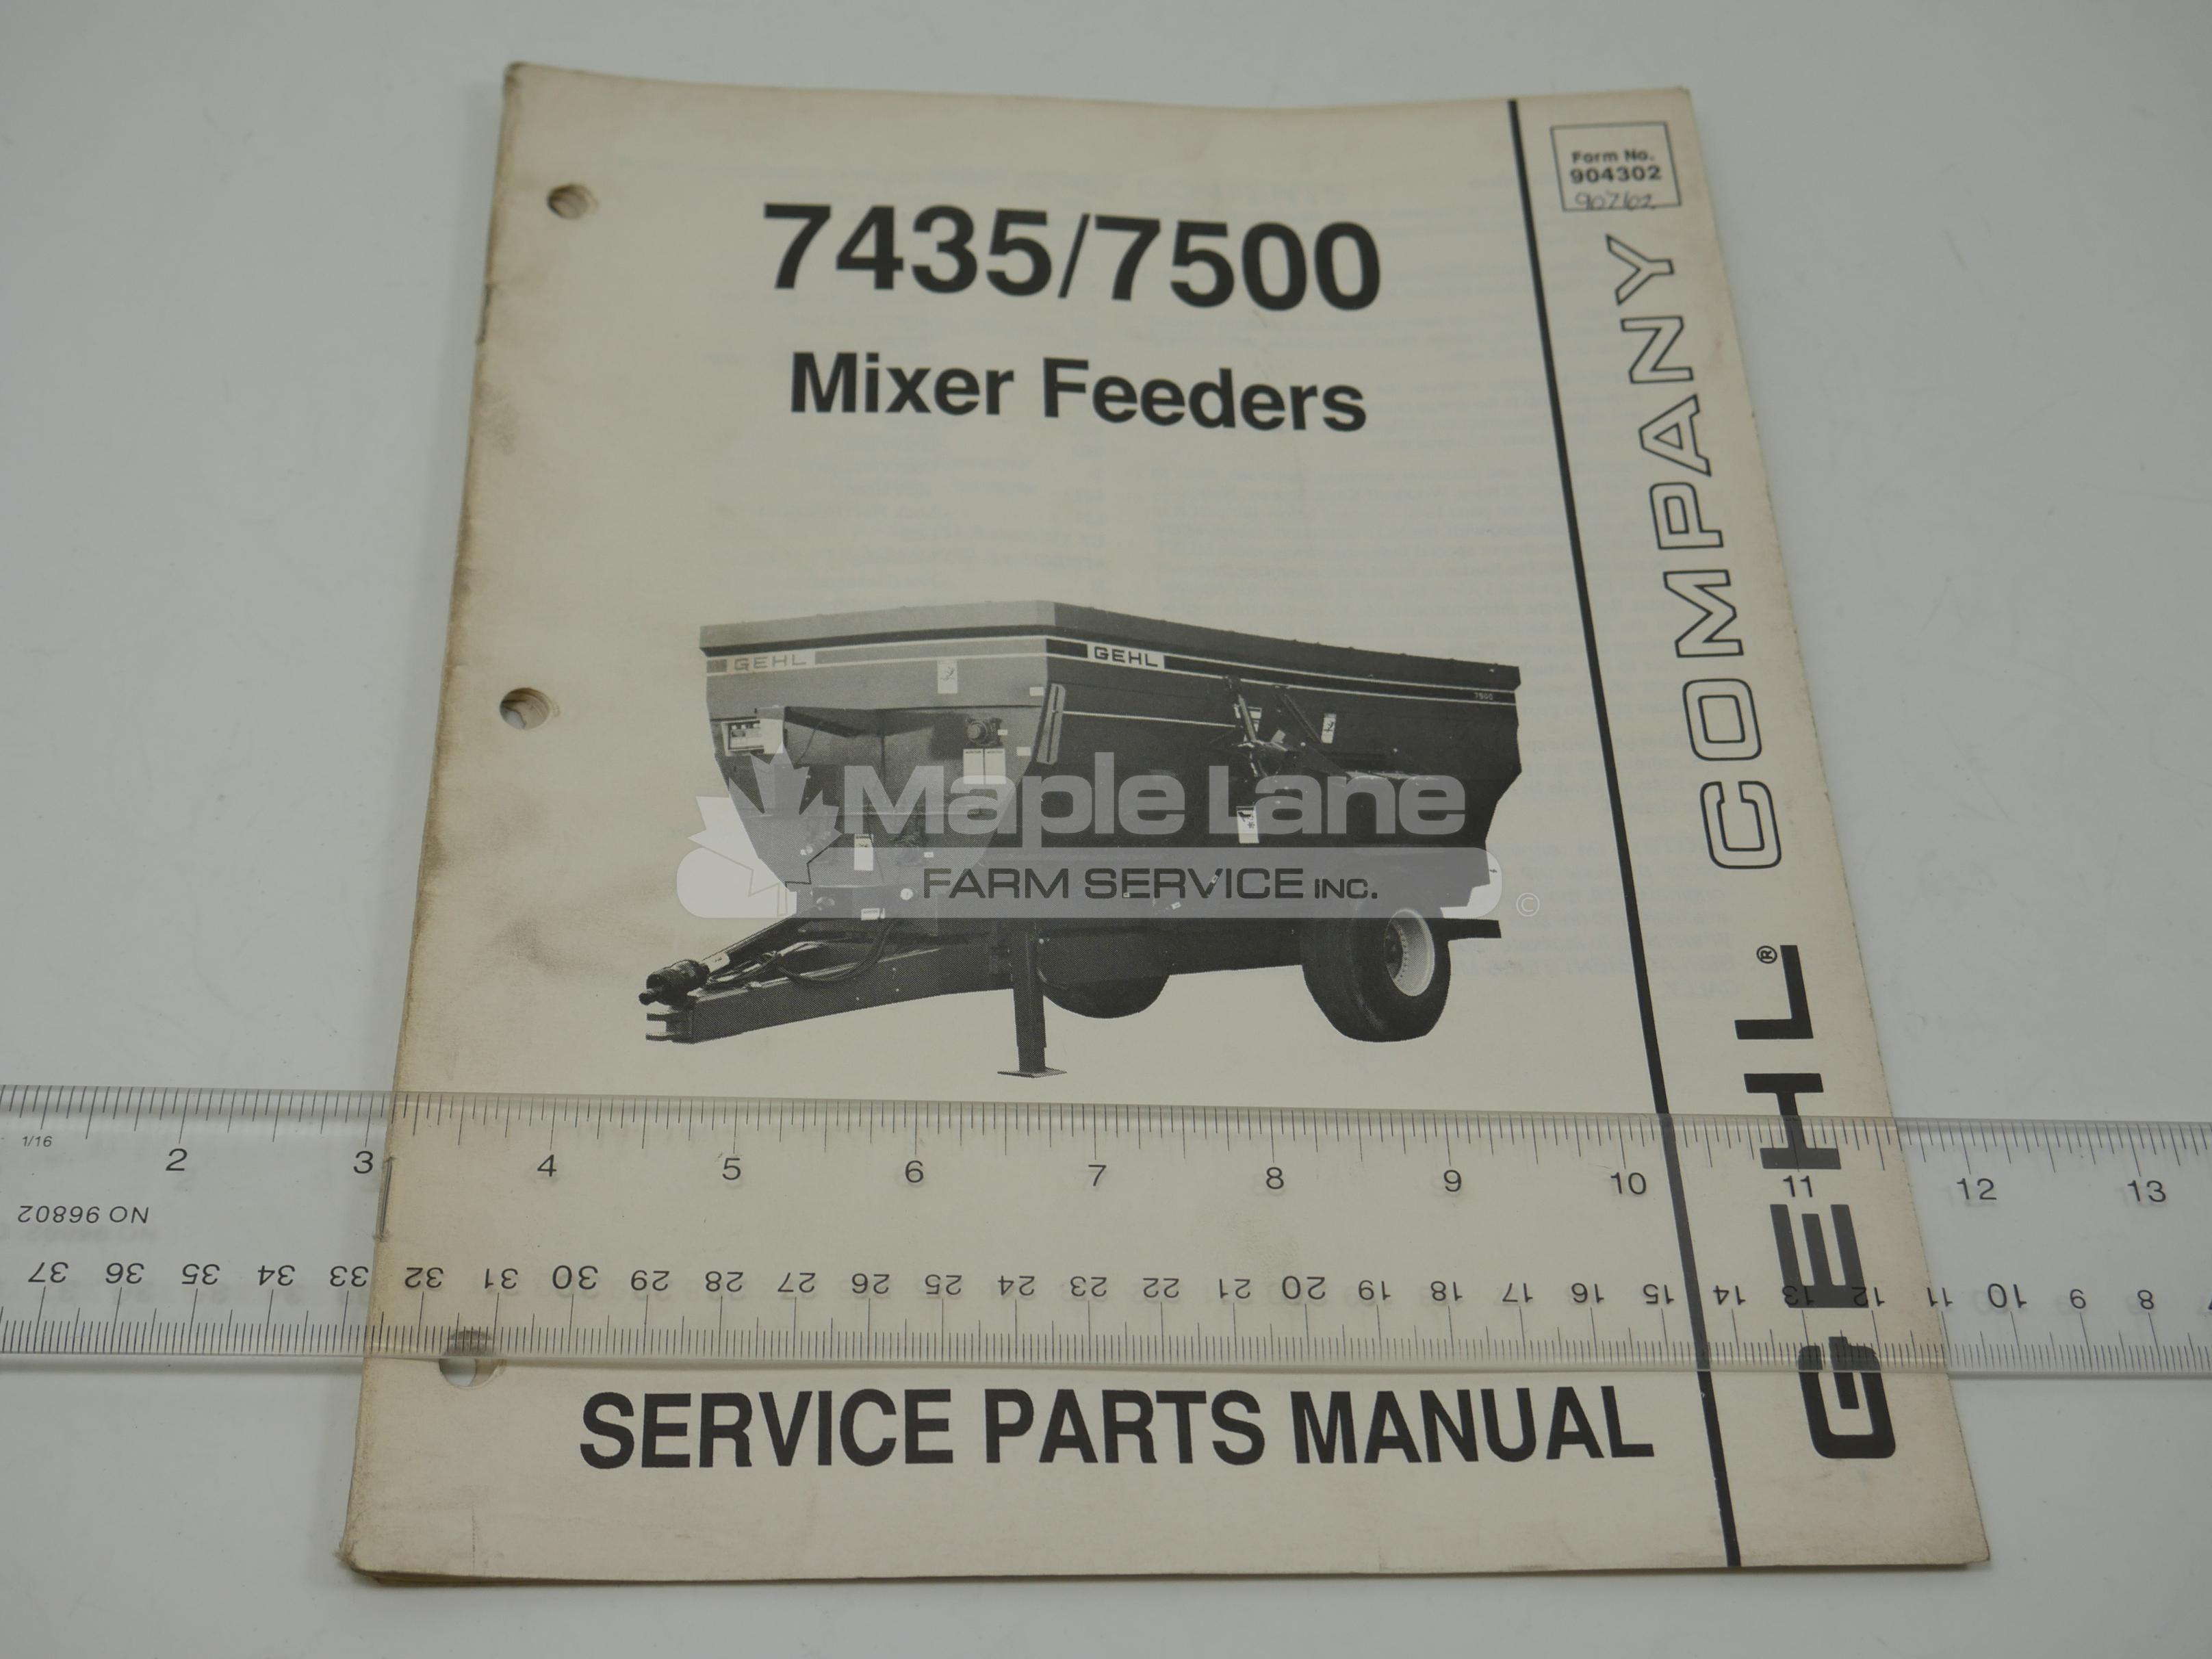 907102 Parts Manual